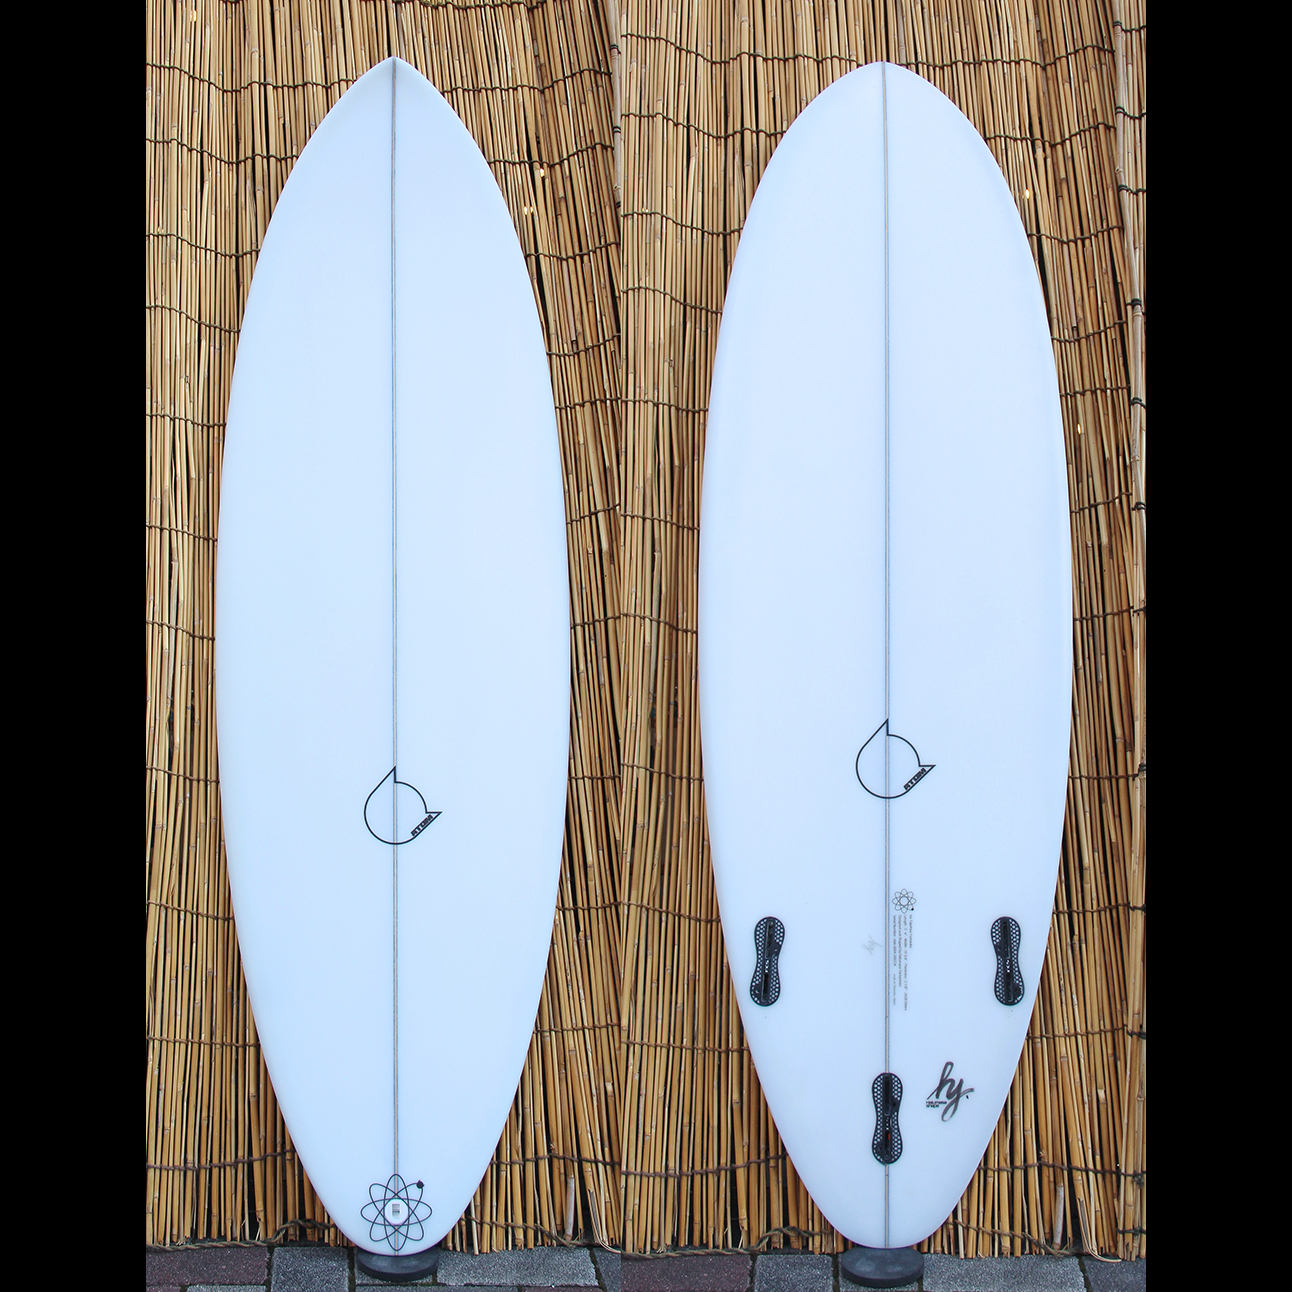 ATOM Surfboard “dab” model